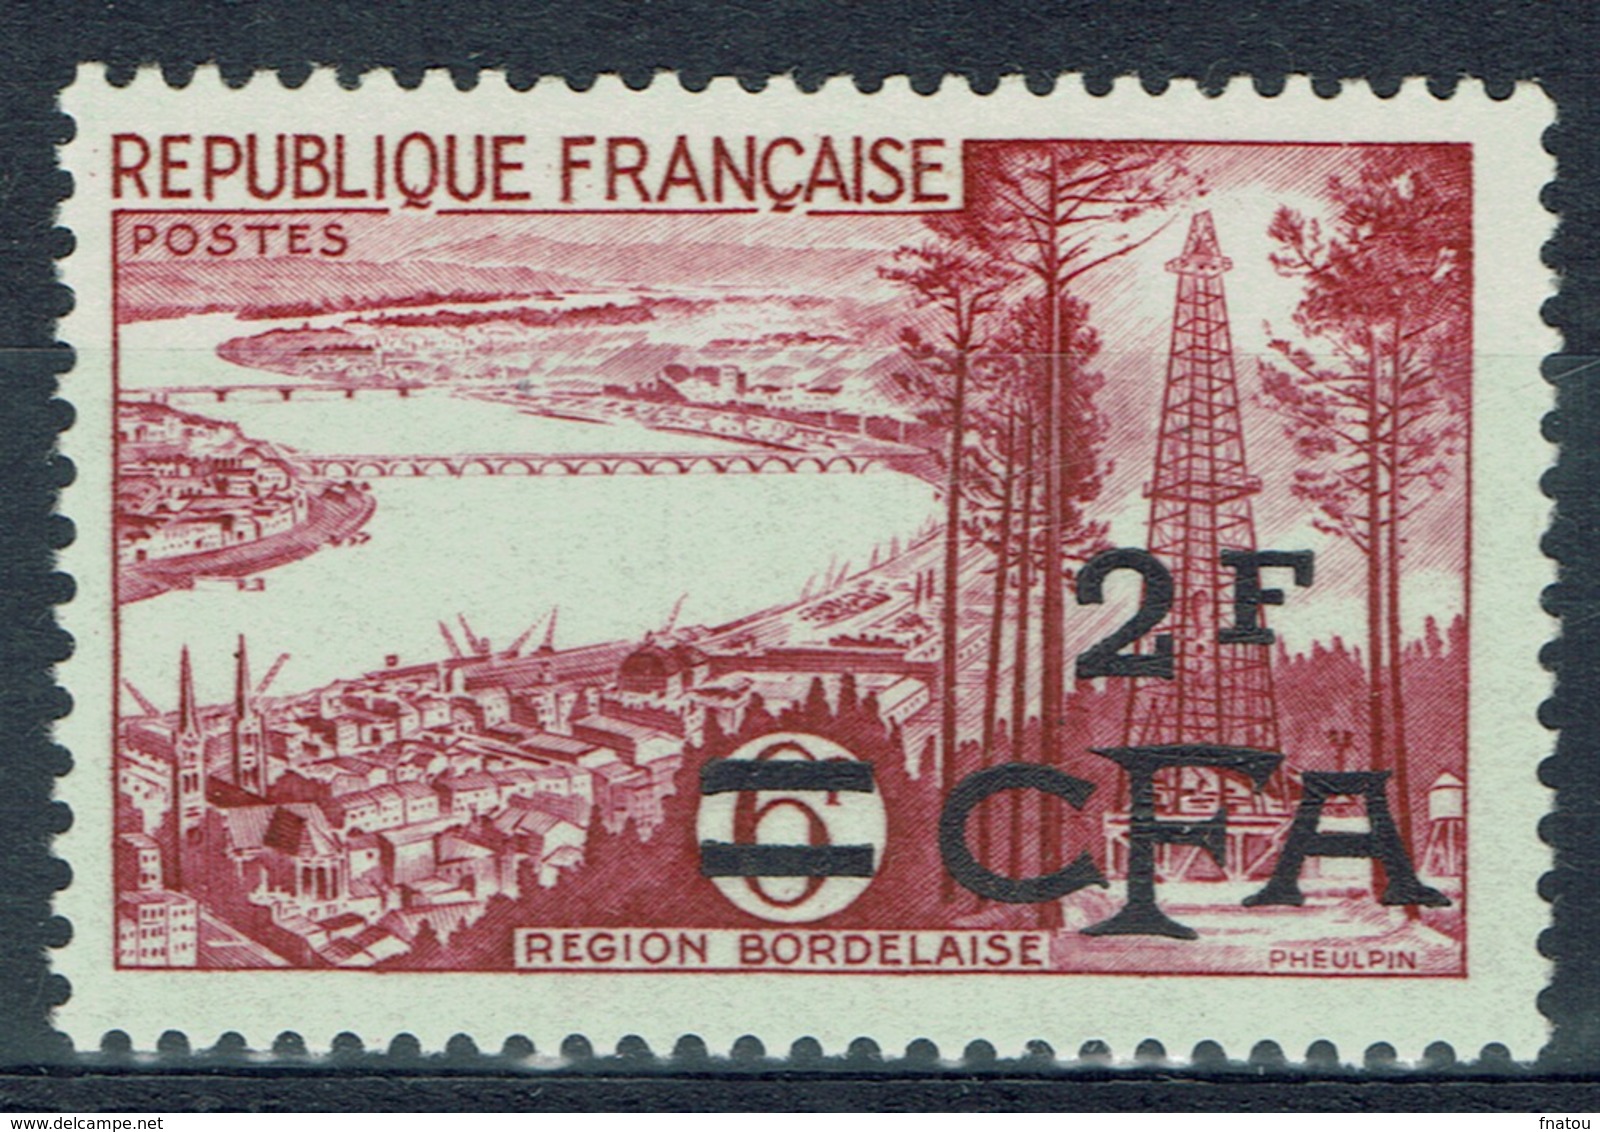 Réunion Island, "Bordeaux", French Stamp Overprint, 1955, MNH VF - Neufs